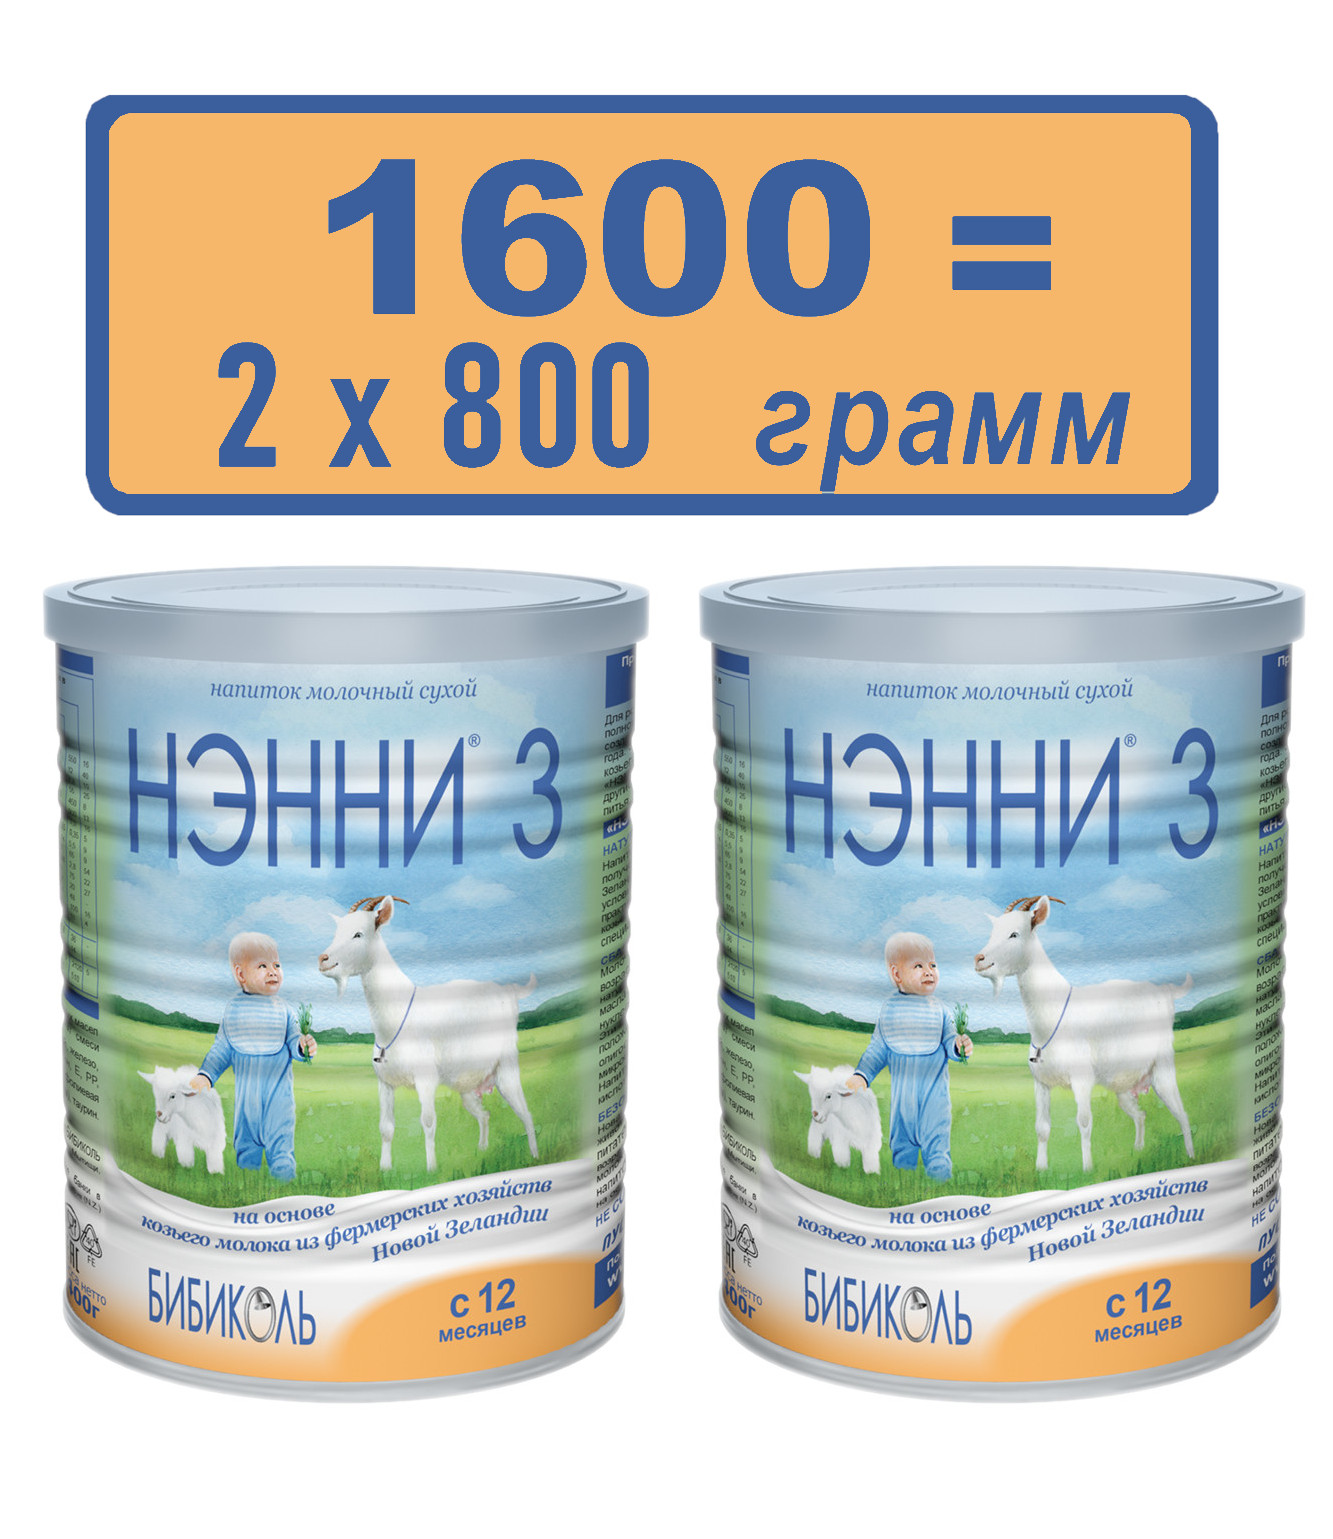 Сухой молочный напиток Бибиколь Нэнни 3, 2х800 гр фертина инозит 1000мг фоливая к та 100мкг 3г пак 30